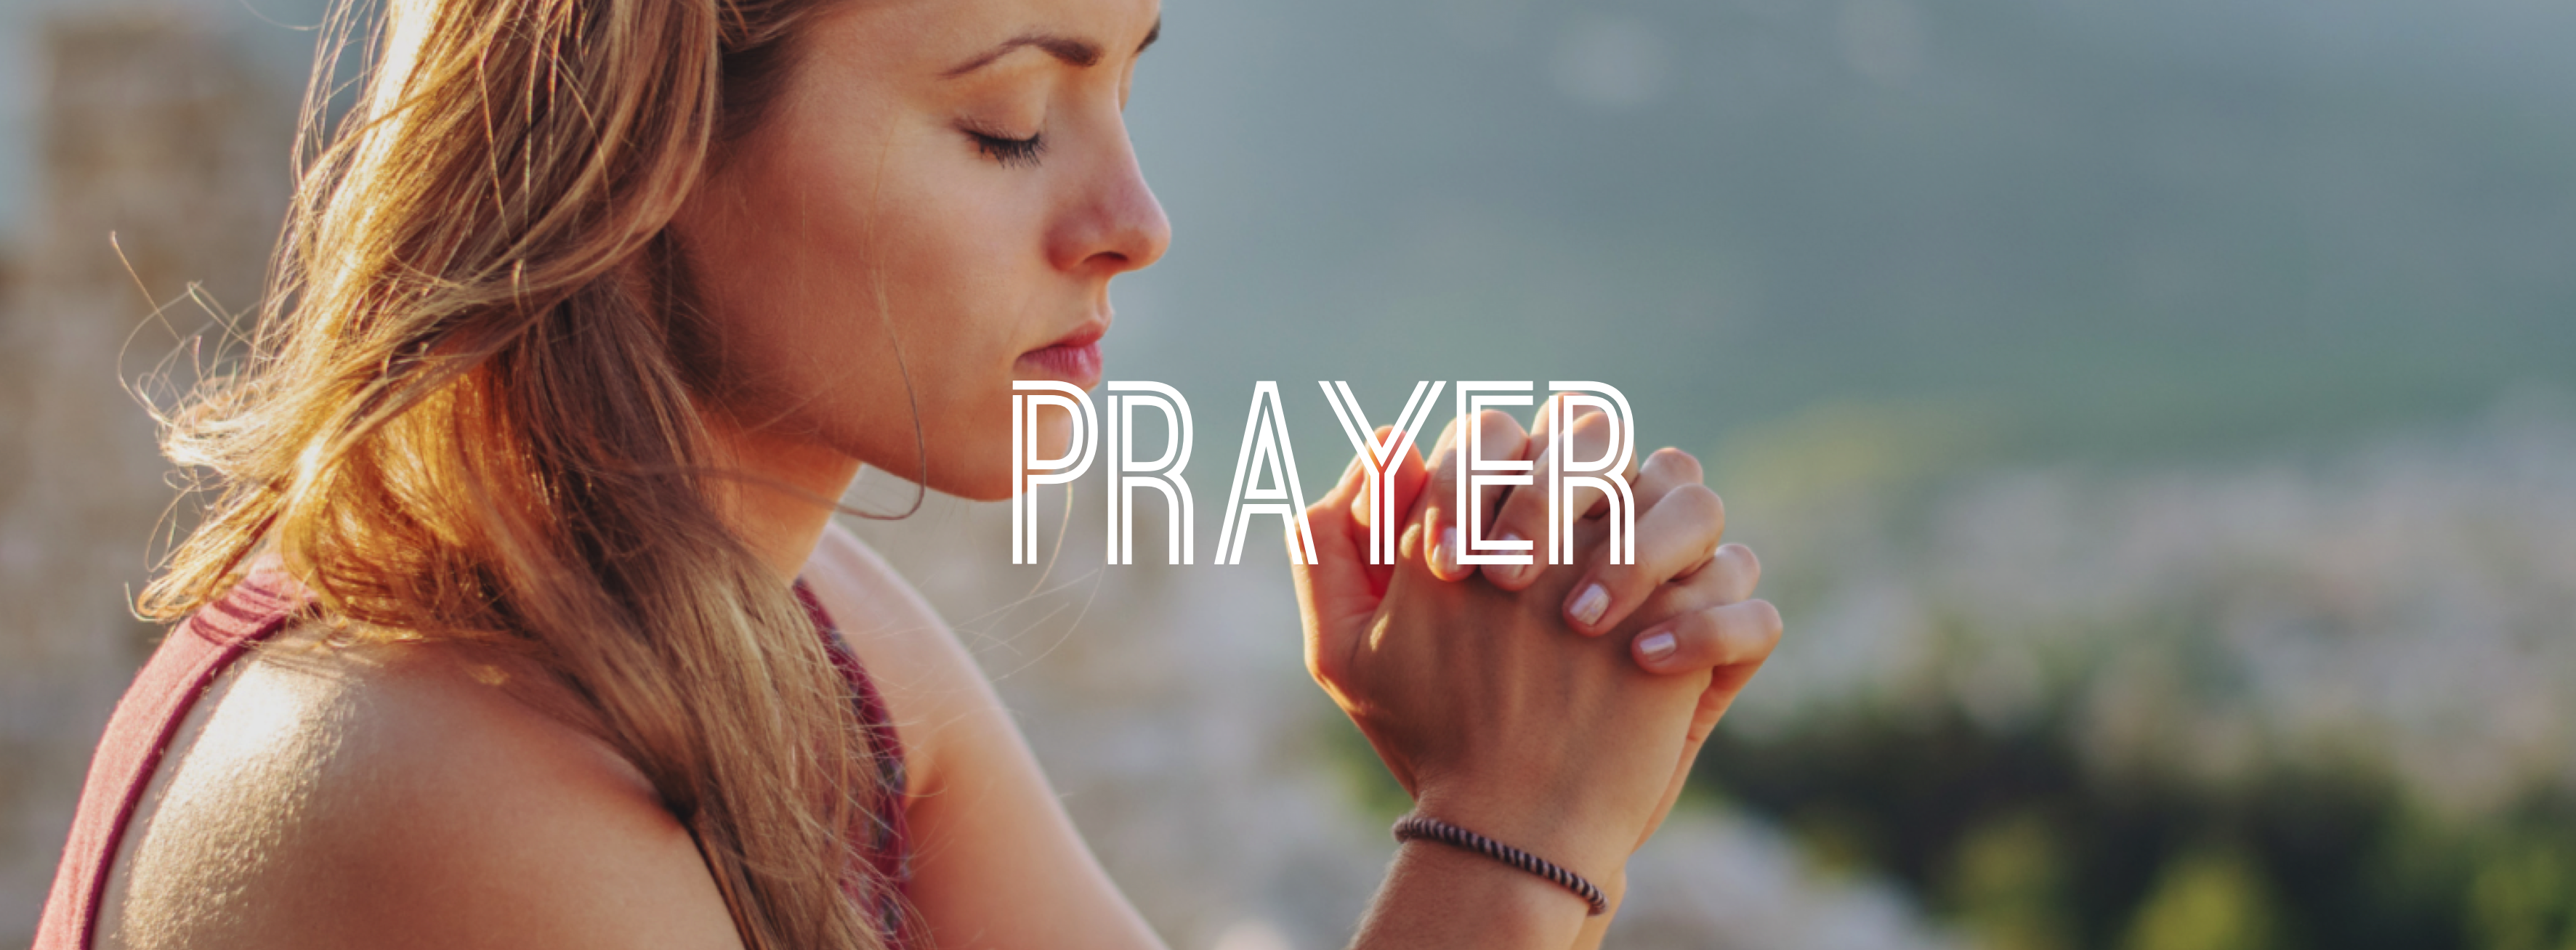 Prayer Website Page Top